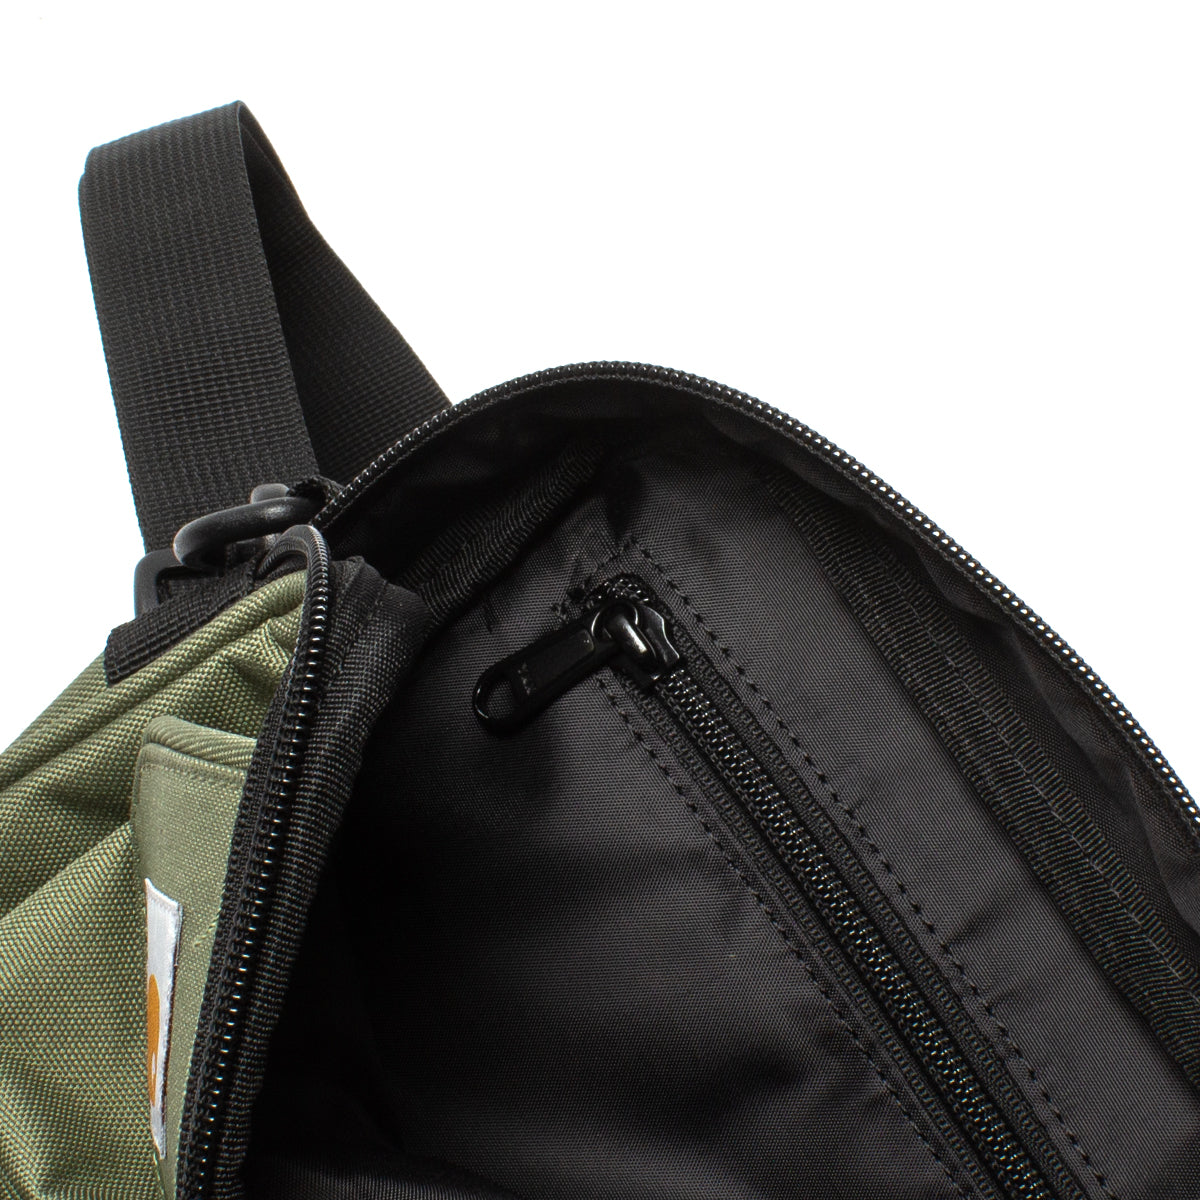 style carhartt sling bag